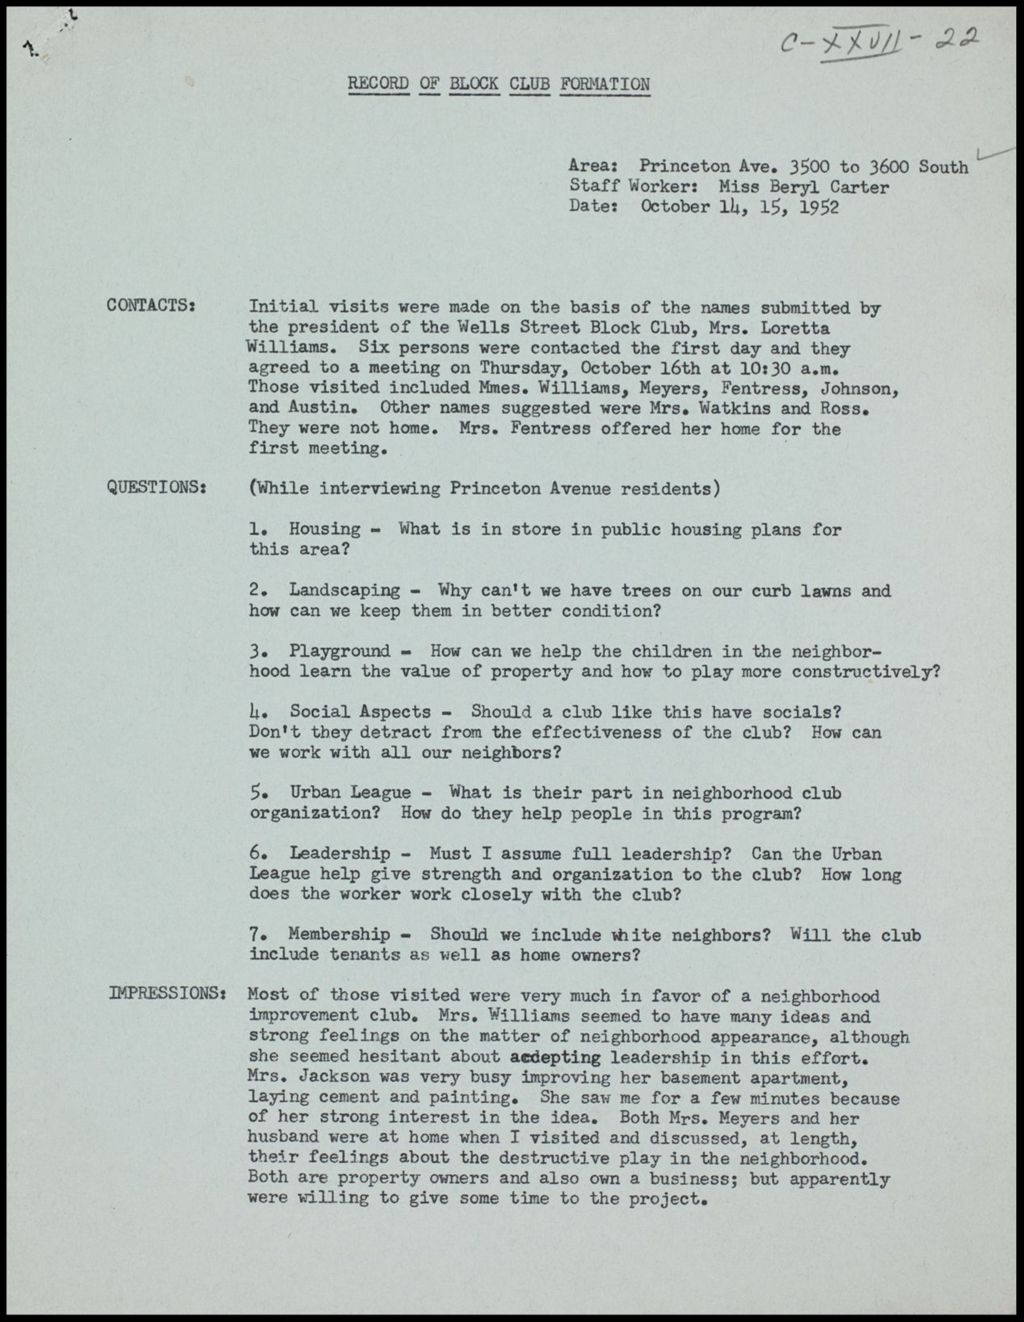 Block Club Reports - Princeton and Wentworth Avenues, 1952 (Folder II-2324)